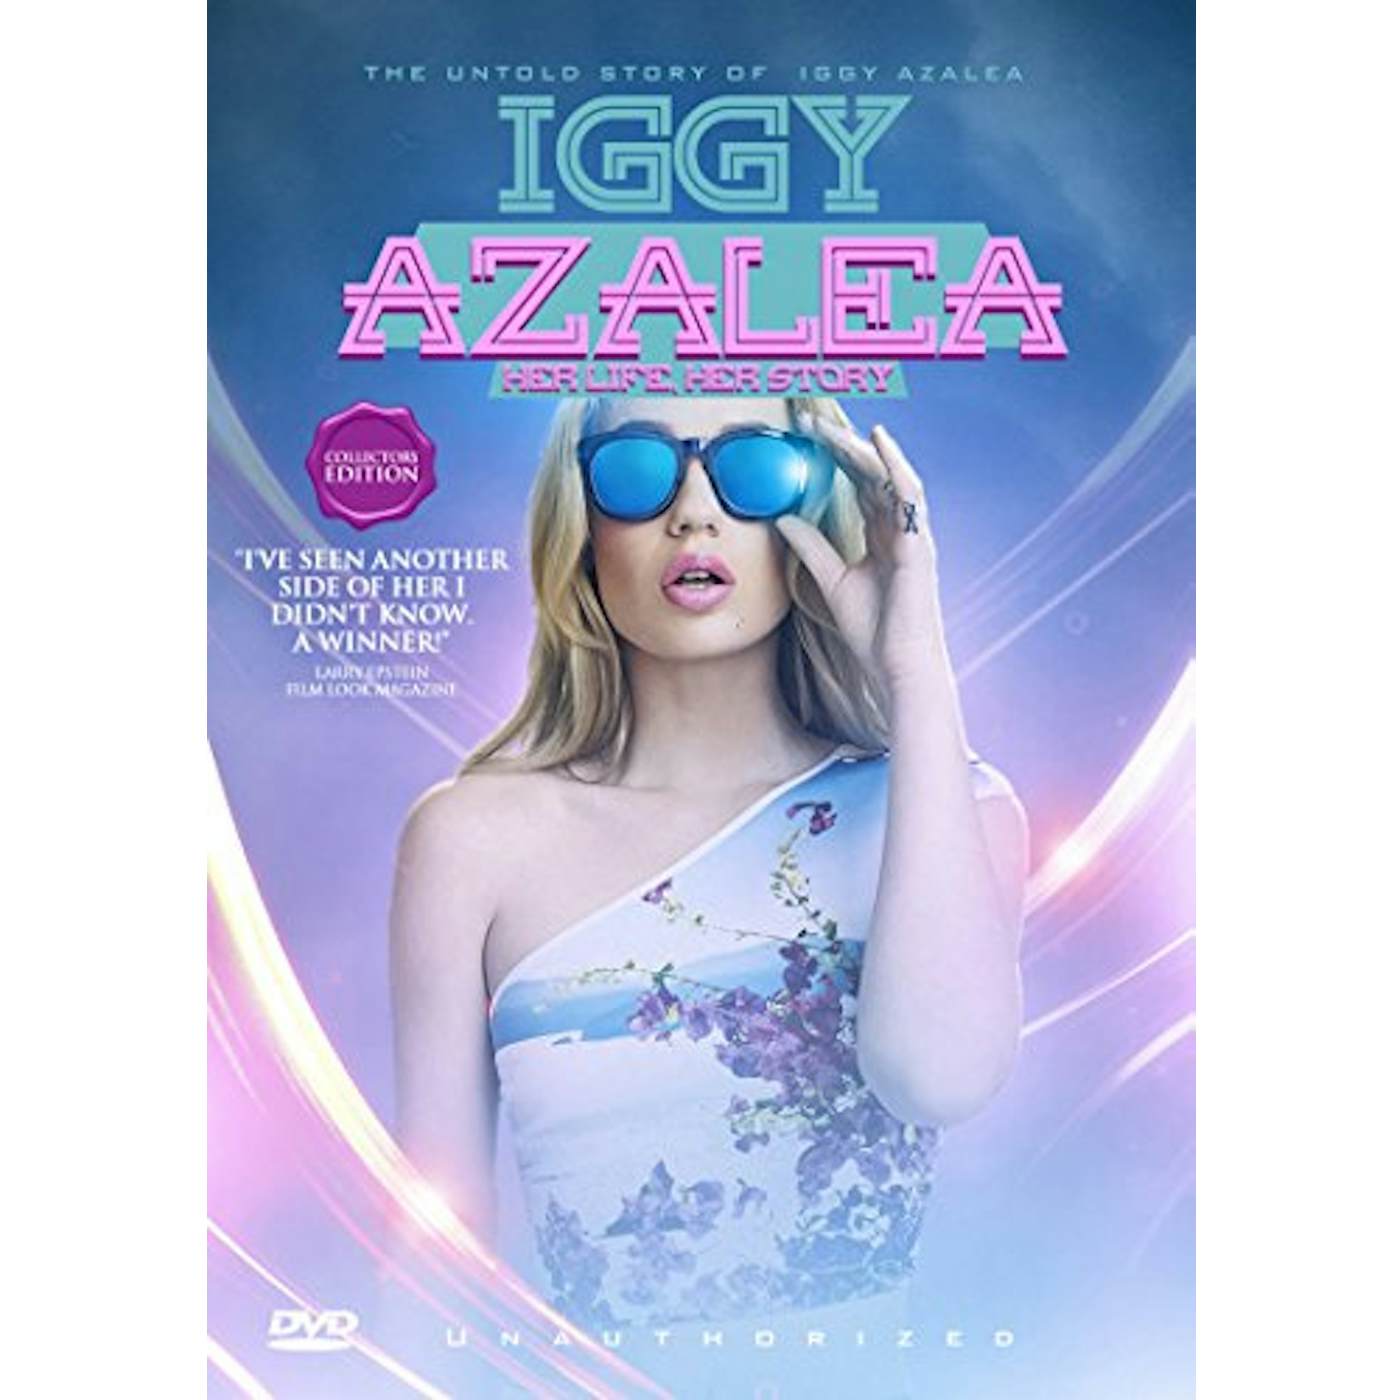 Iggy Azalea HER LIFE HER STORY DVD